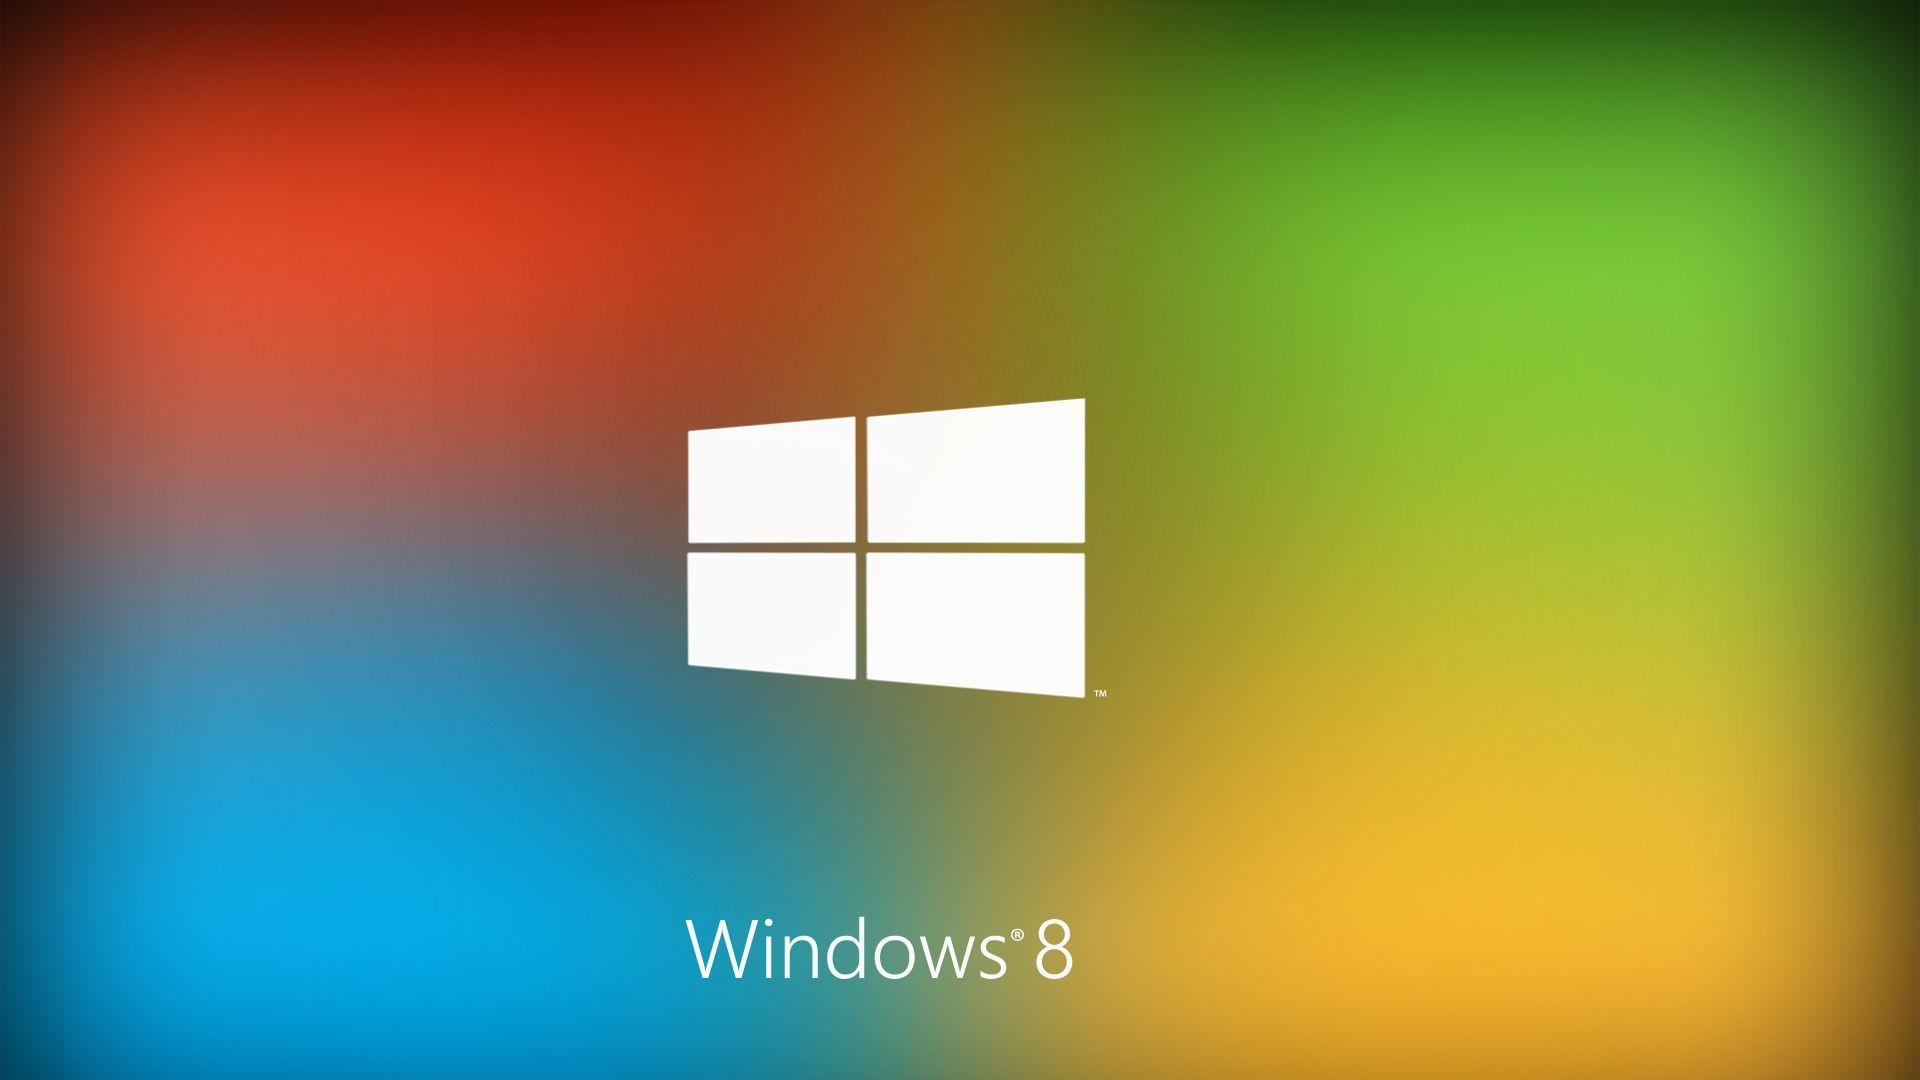 Windows 8 Wallpaper Background